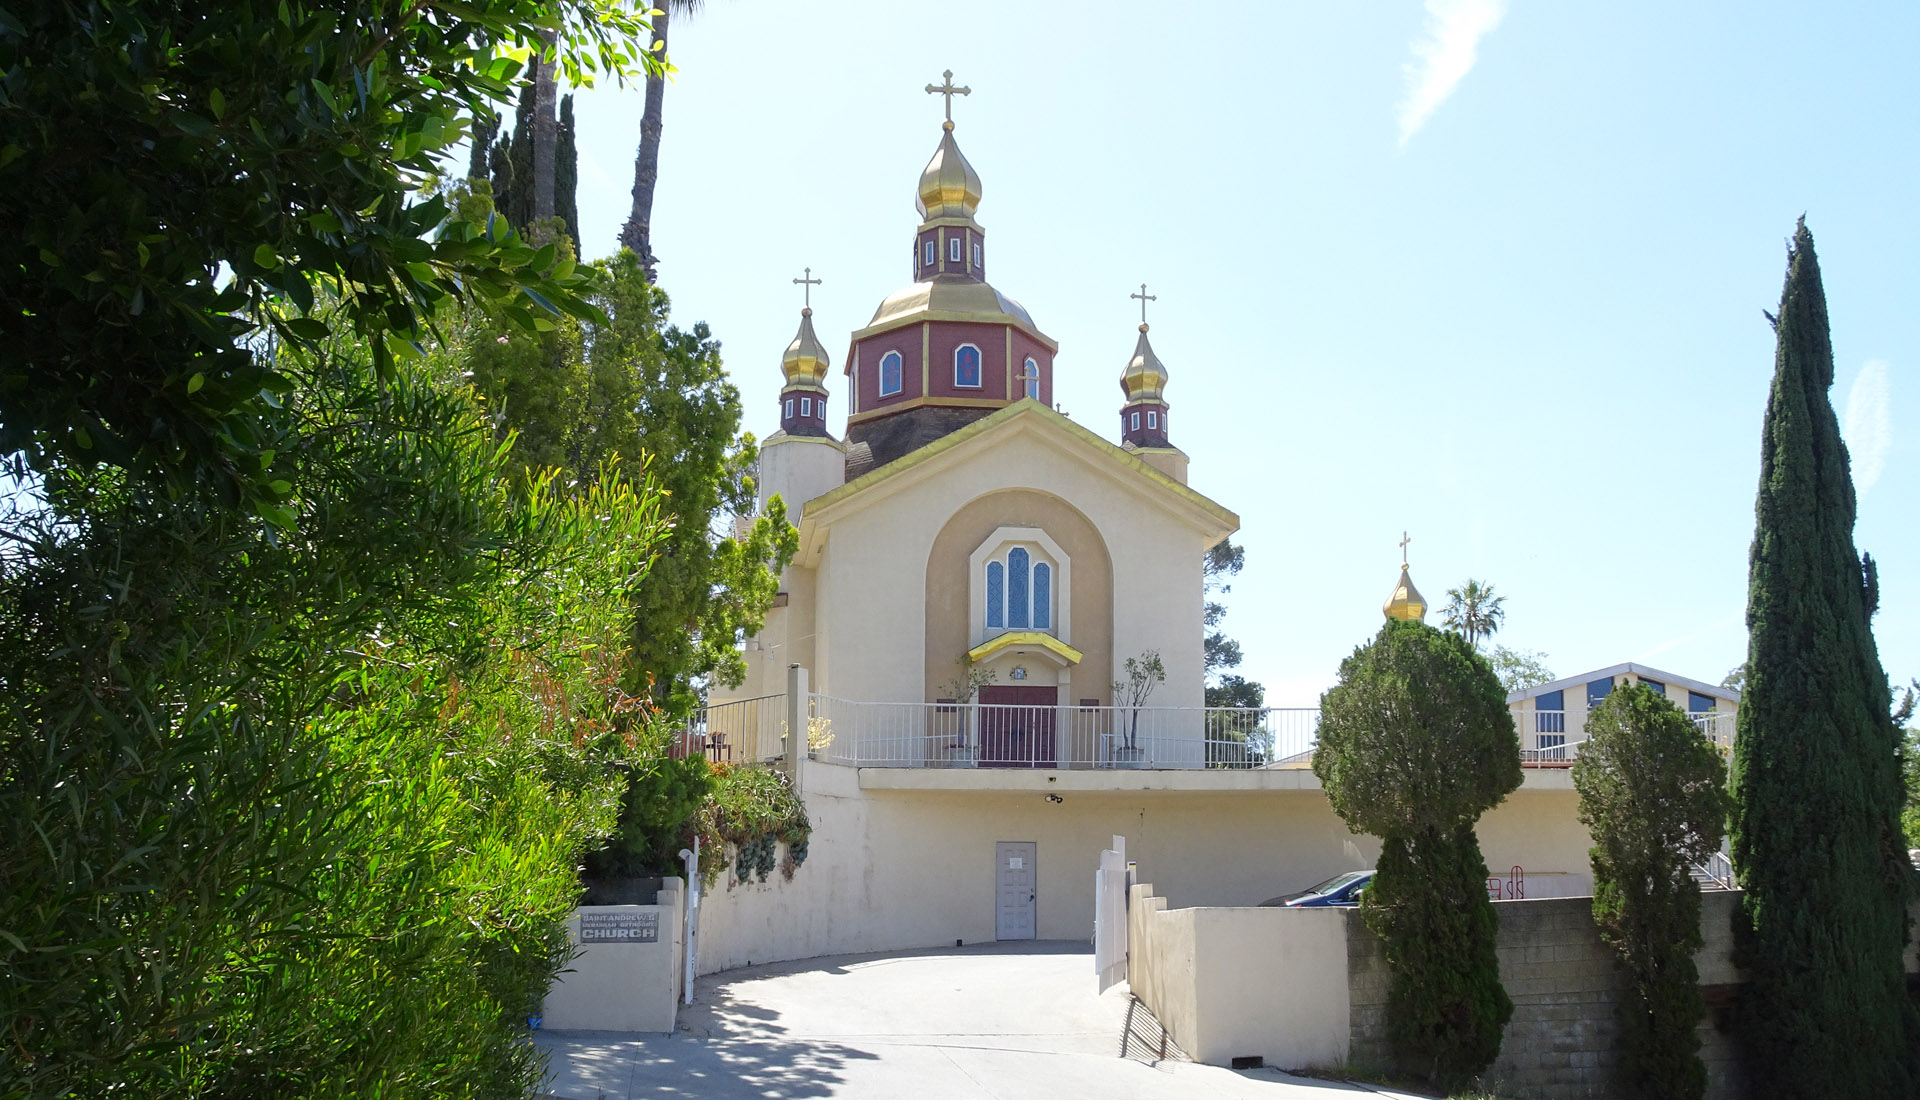 St. Andrew’s Ukrainian Orthodox Church